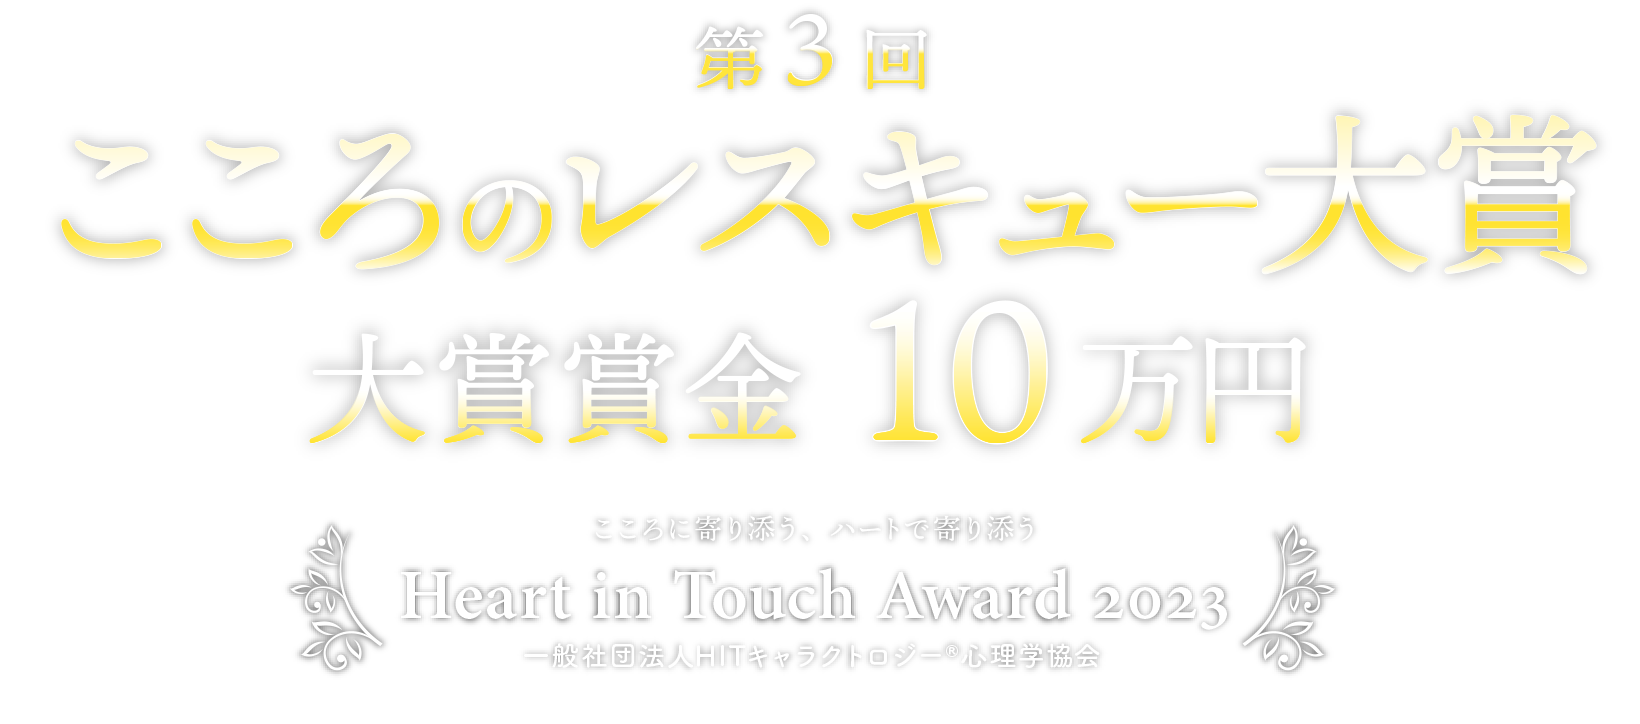 Heart in Touch Award 2023 一般社団法人キャラクトロジー心理学協会